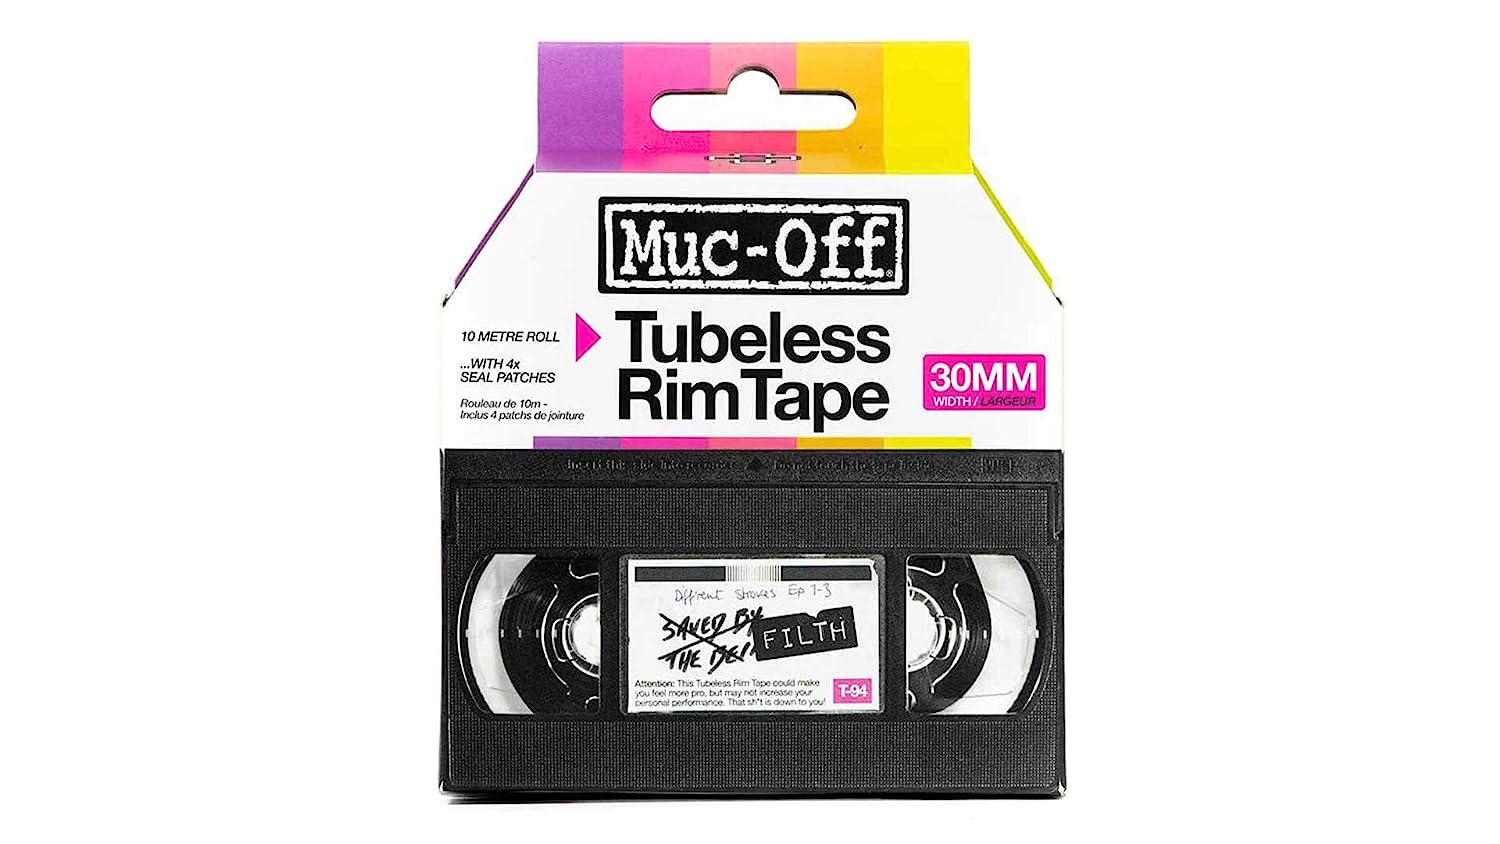 Muc-Off Tubeless Rim Tape, 30mm - Adhesive Bike Tire [...]